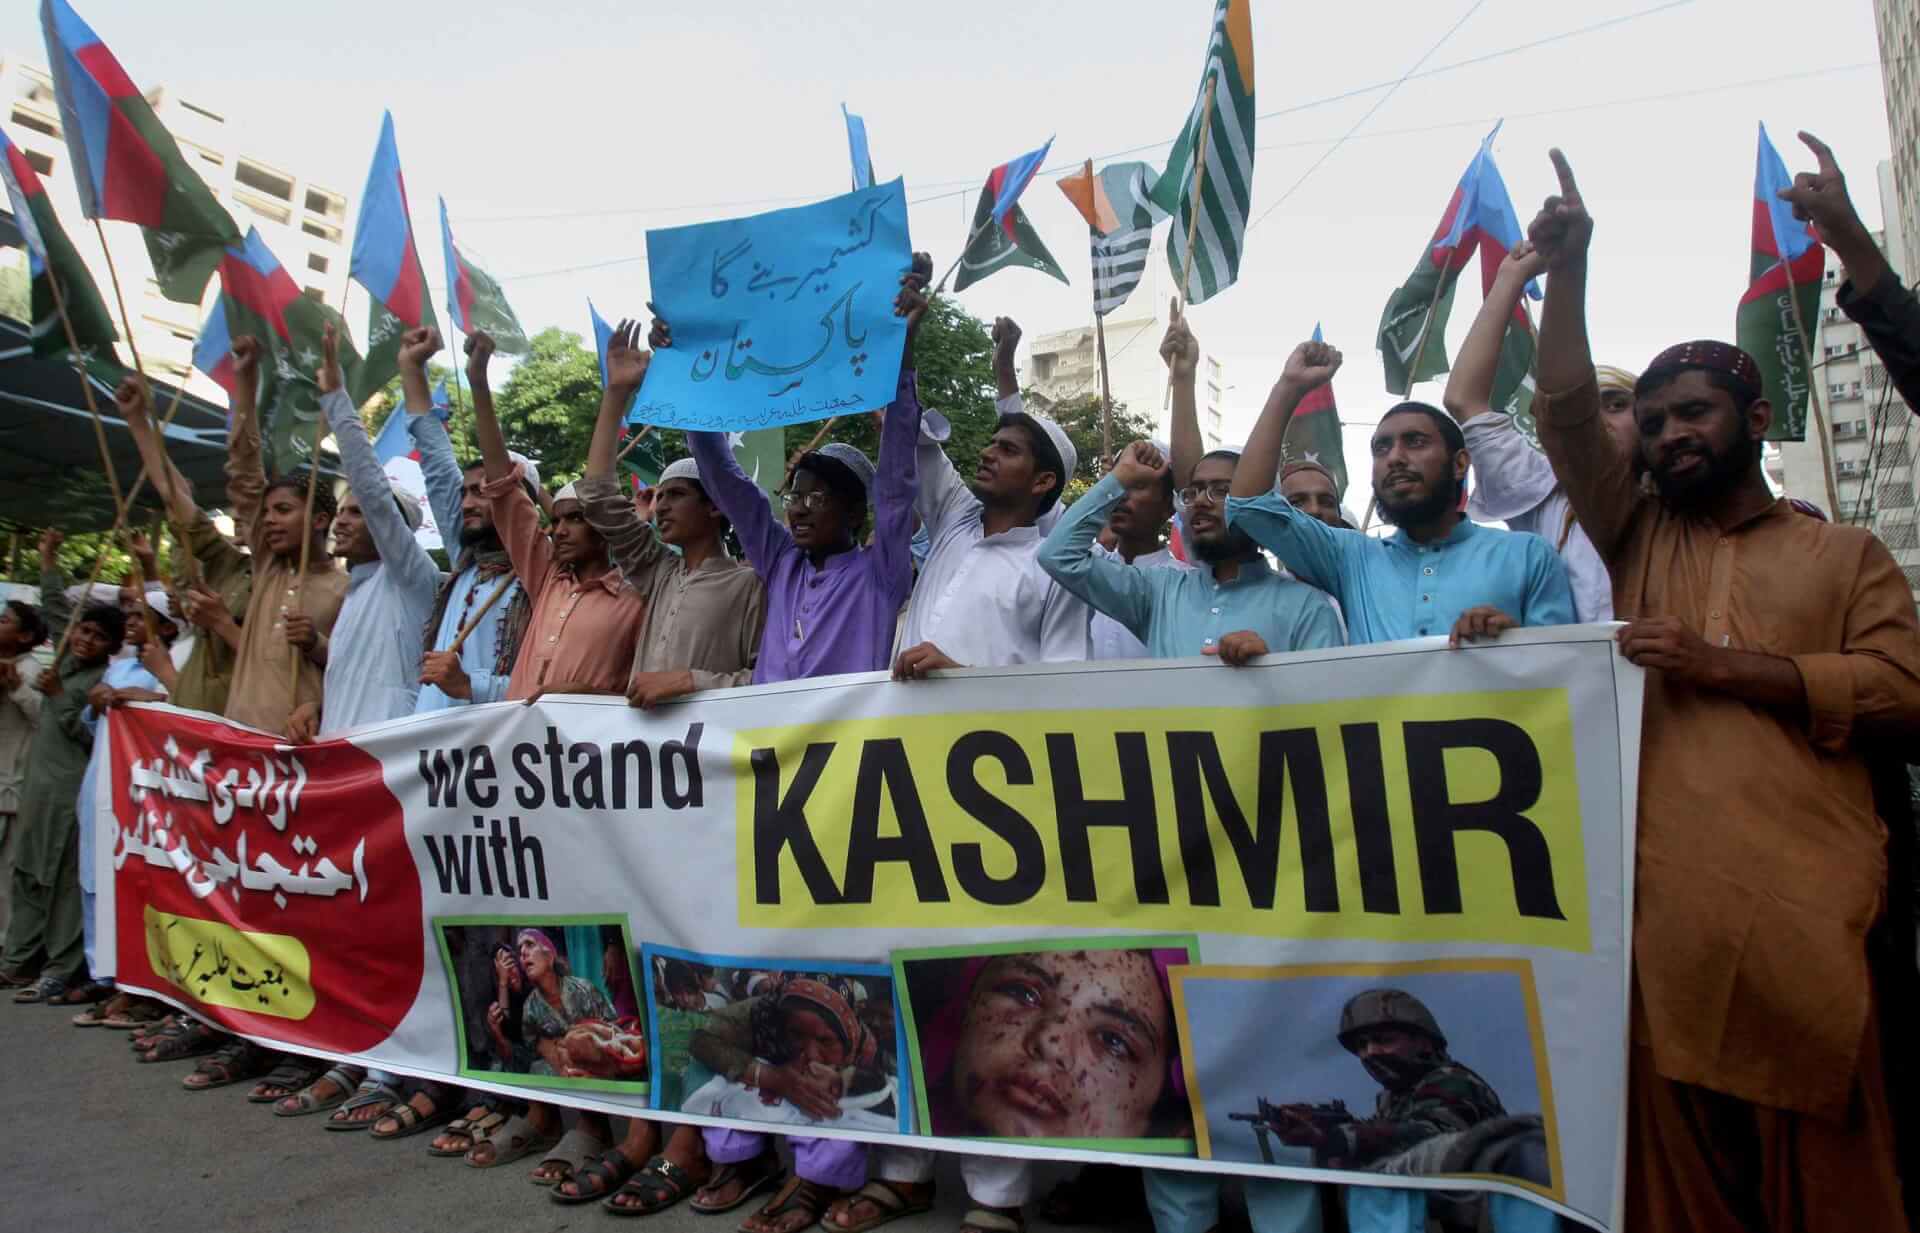 Pakistan Slams India’s “Appalling” Response to OIC Statement on J&K